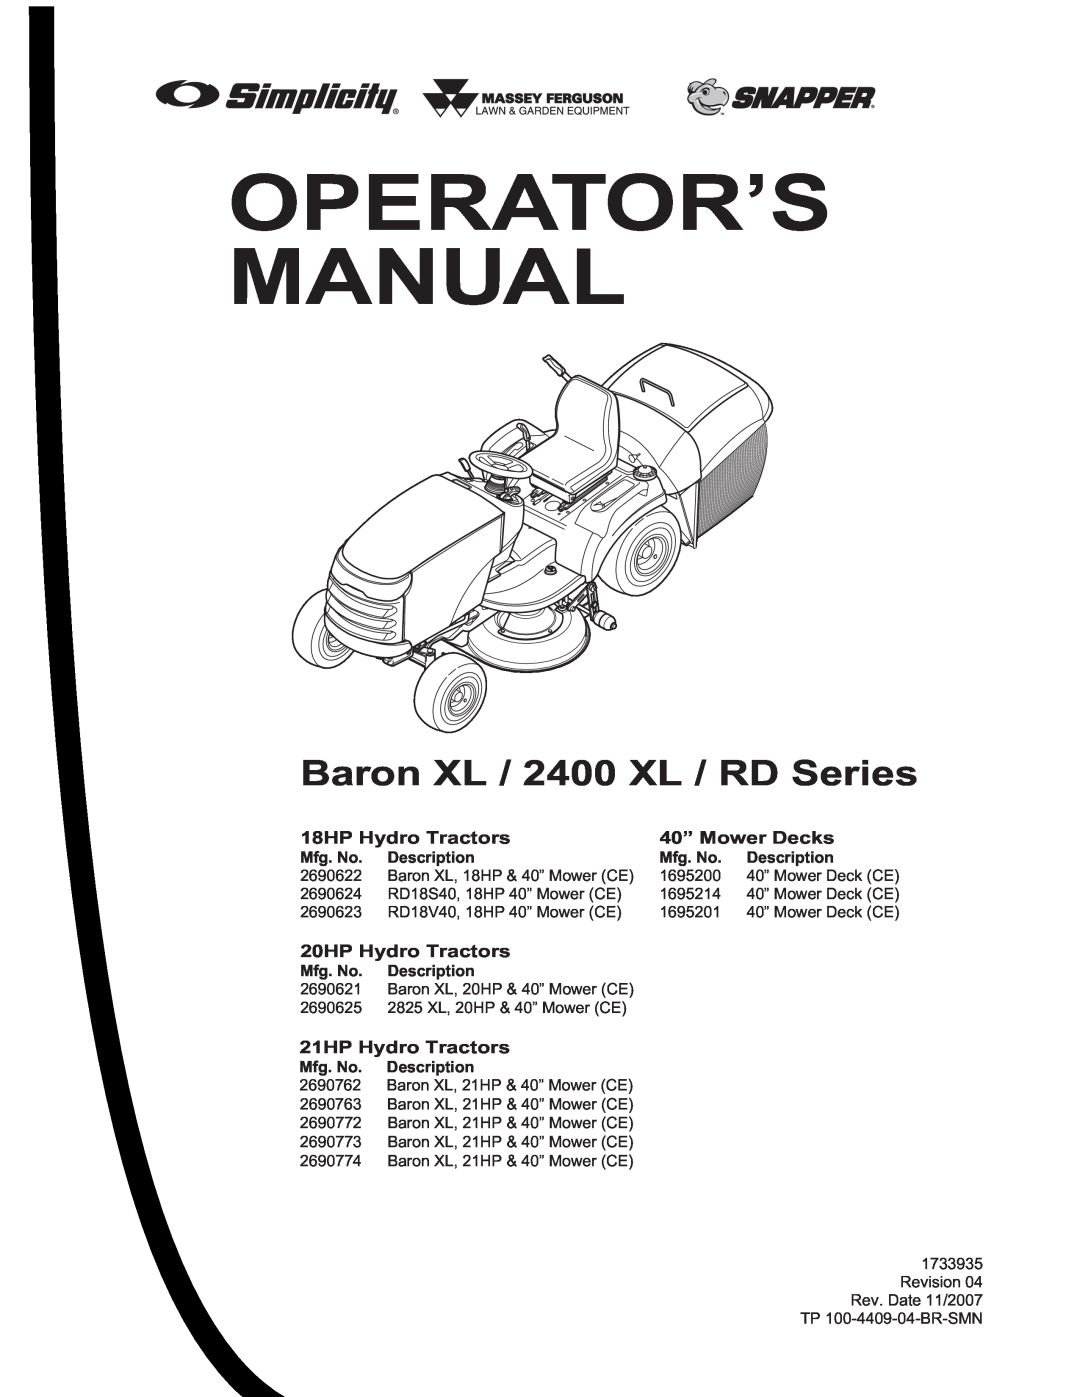 Snapper XL Series, 2400 XL Series, RD Series manual Operator’S Manual, Baron XL / 2400 XL / RD Series, 18HP Hydro Tractors 